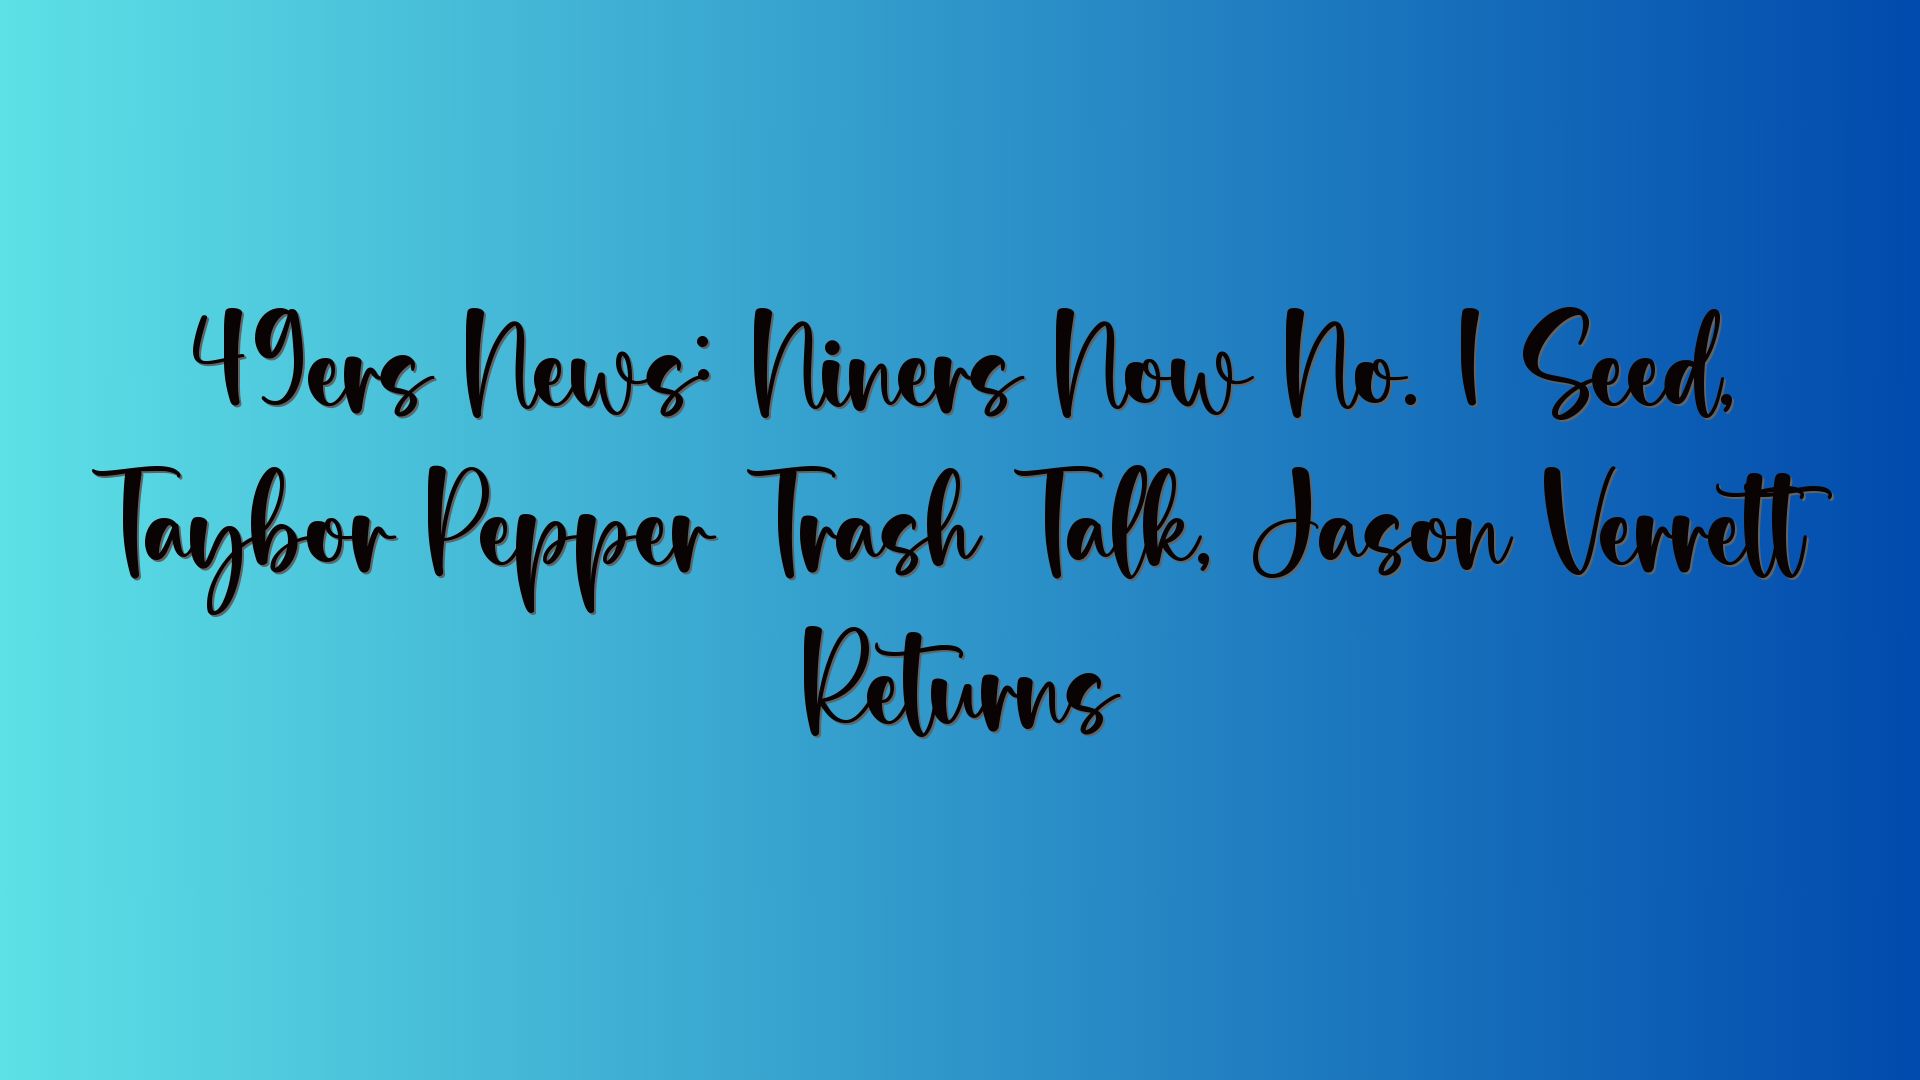 49ers News: Niners Now No. 1 Seed, Taybor Pepper Trash Talk, Jason Verrett Returns